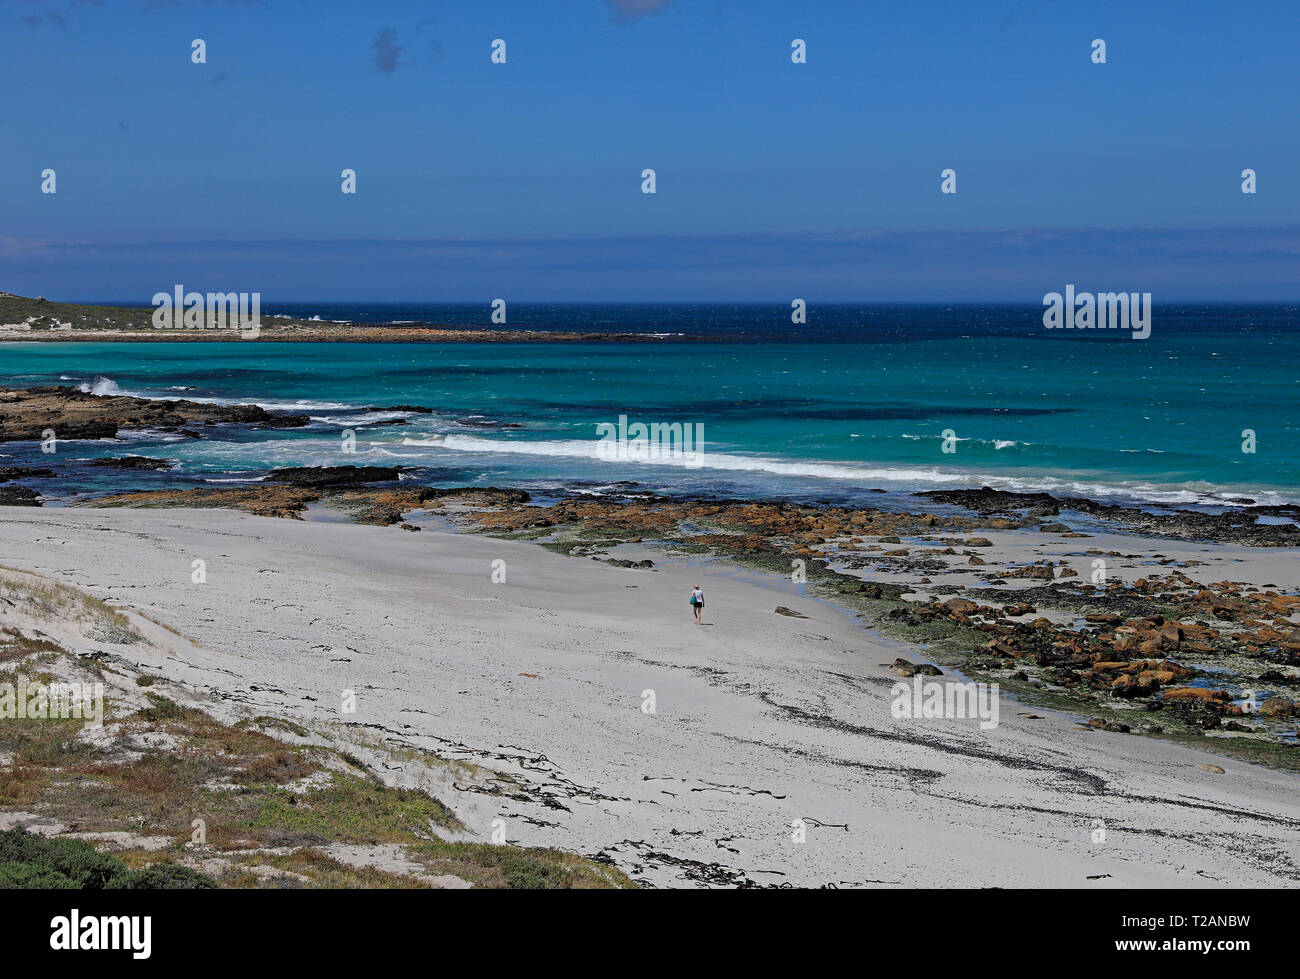 The coastal area near Misty Cliffs along the Atlantic Seaboard, Cape Town, South Africa. Stock Photo